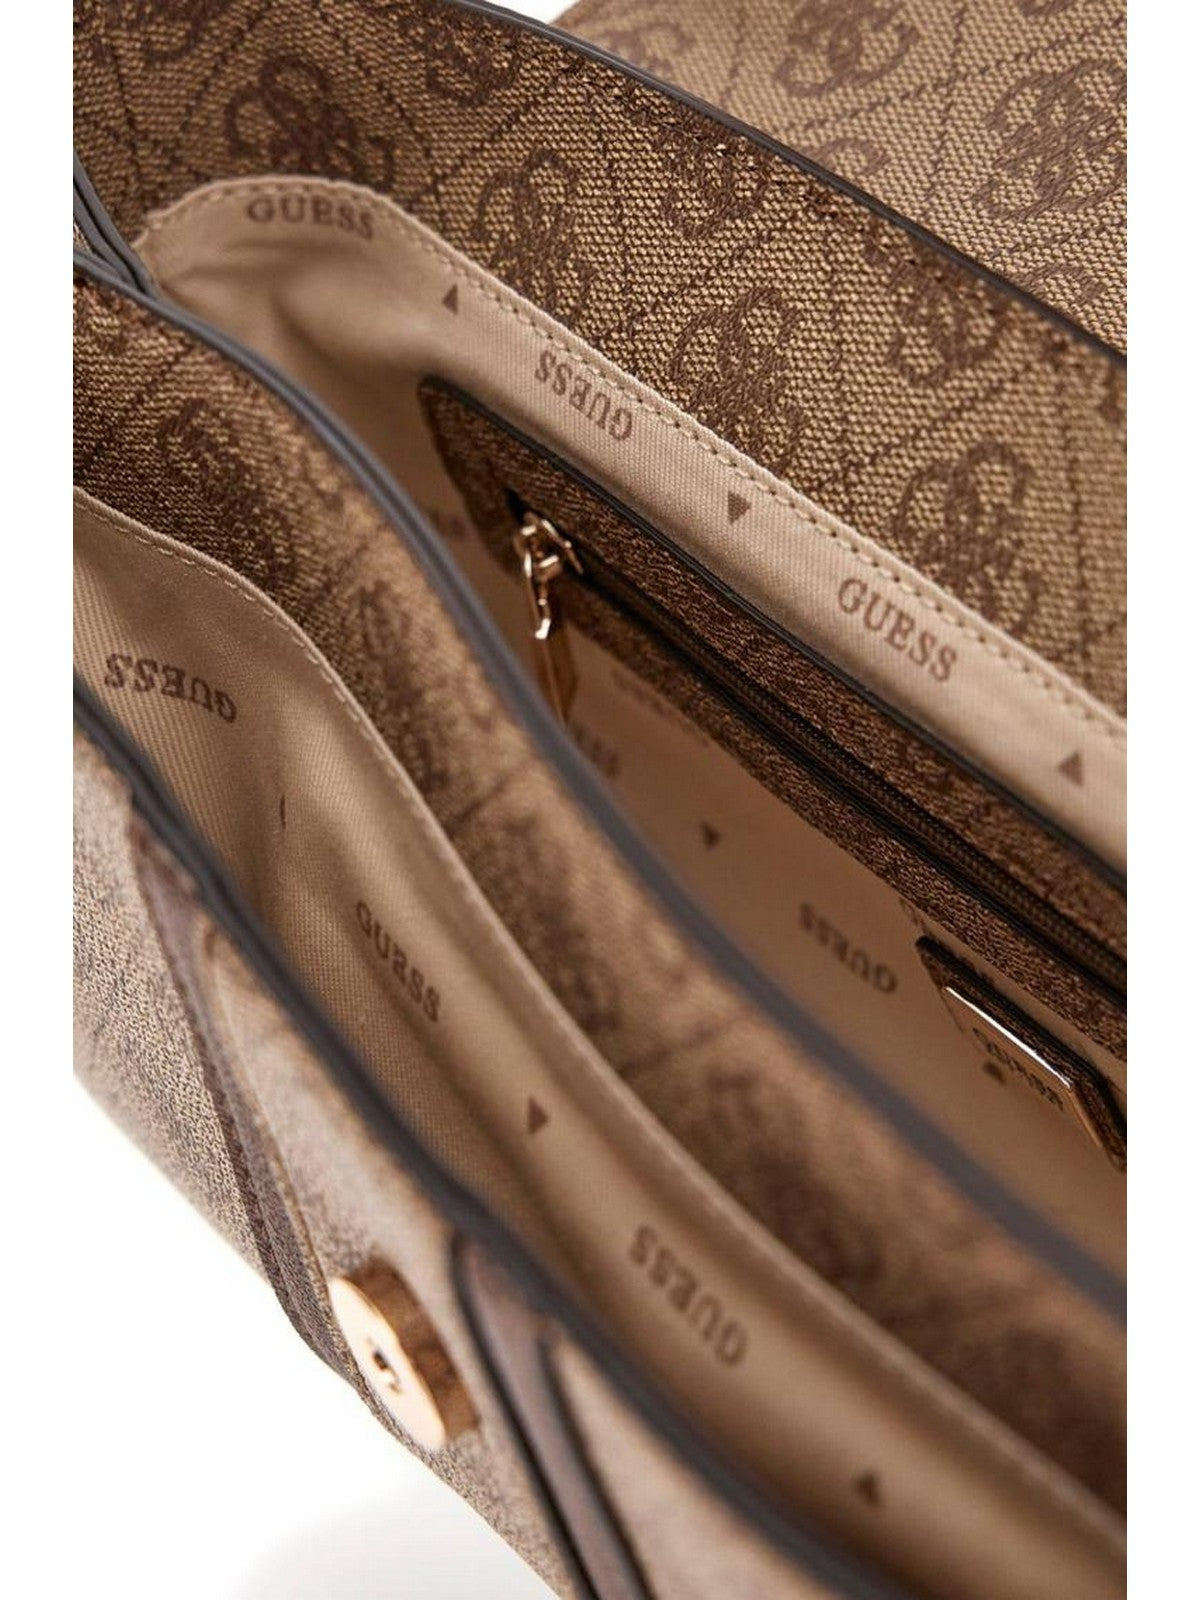 GUESS Mini Sling Bag pour femmes HWSG90 00210 LGW Brown